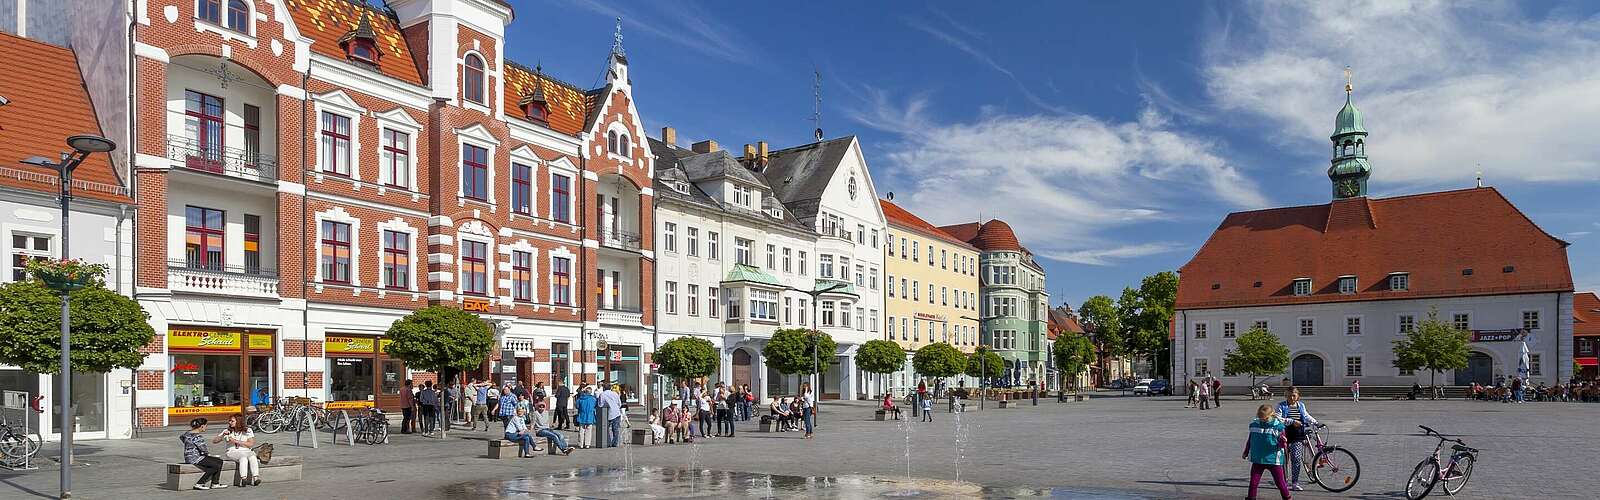 Marktplatz in Finsterwalde,
        
    

        Foto: Landkreis Elbe-Elster/Andreas Franke